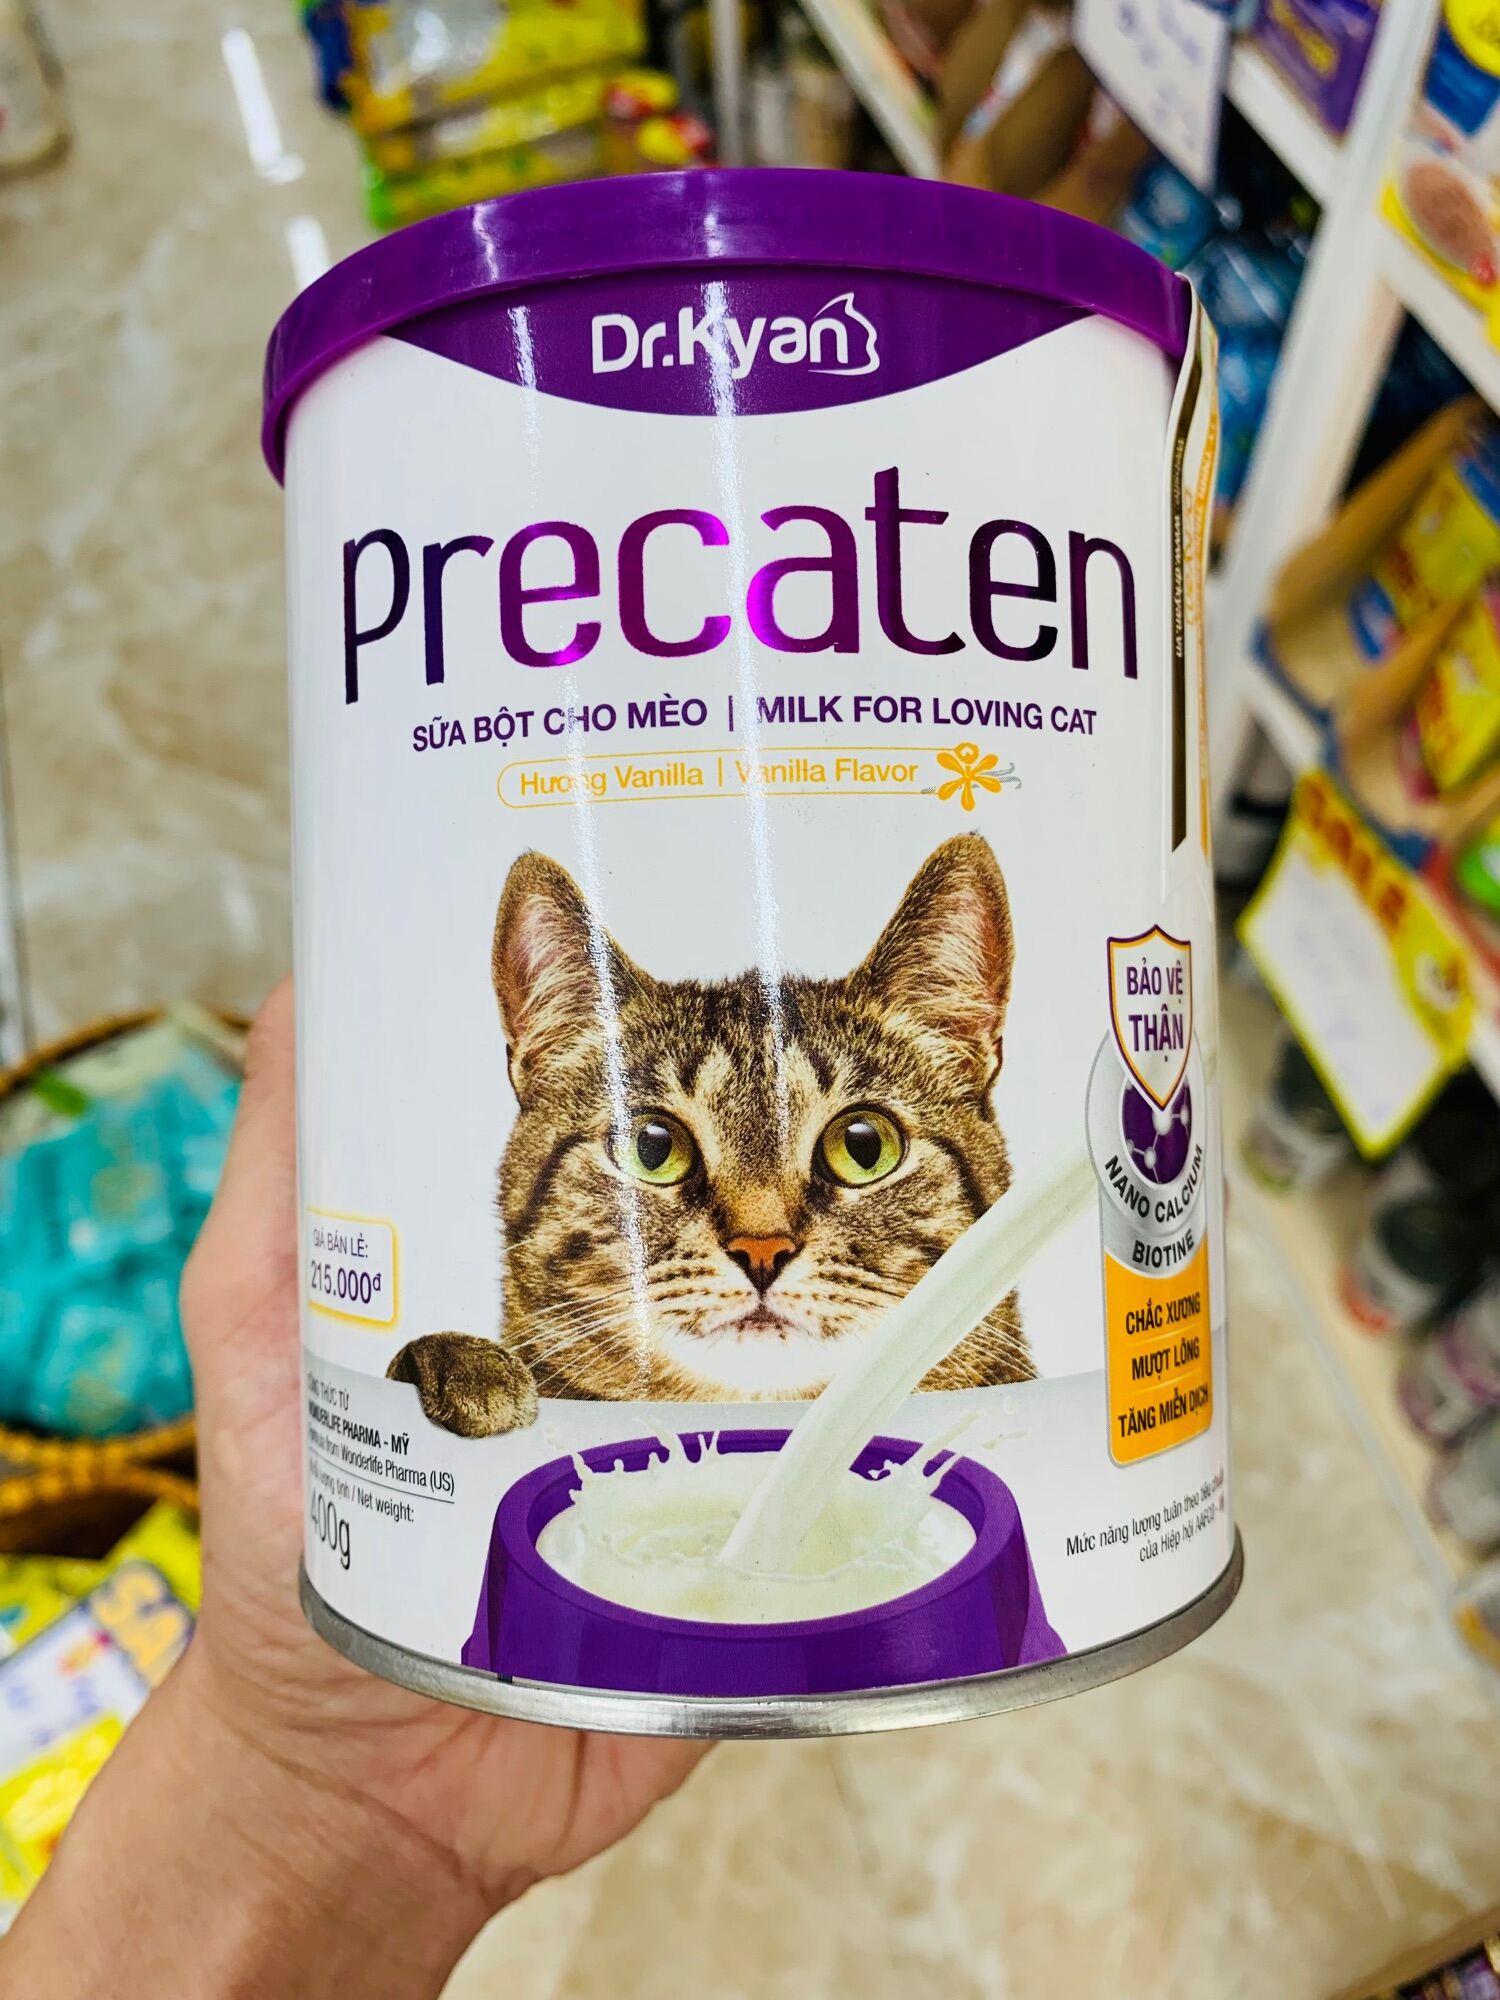 Sữa bột cho mèo DrKyan Precaten 400g lon